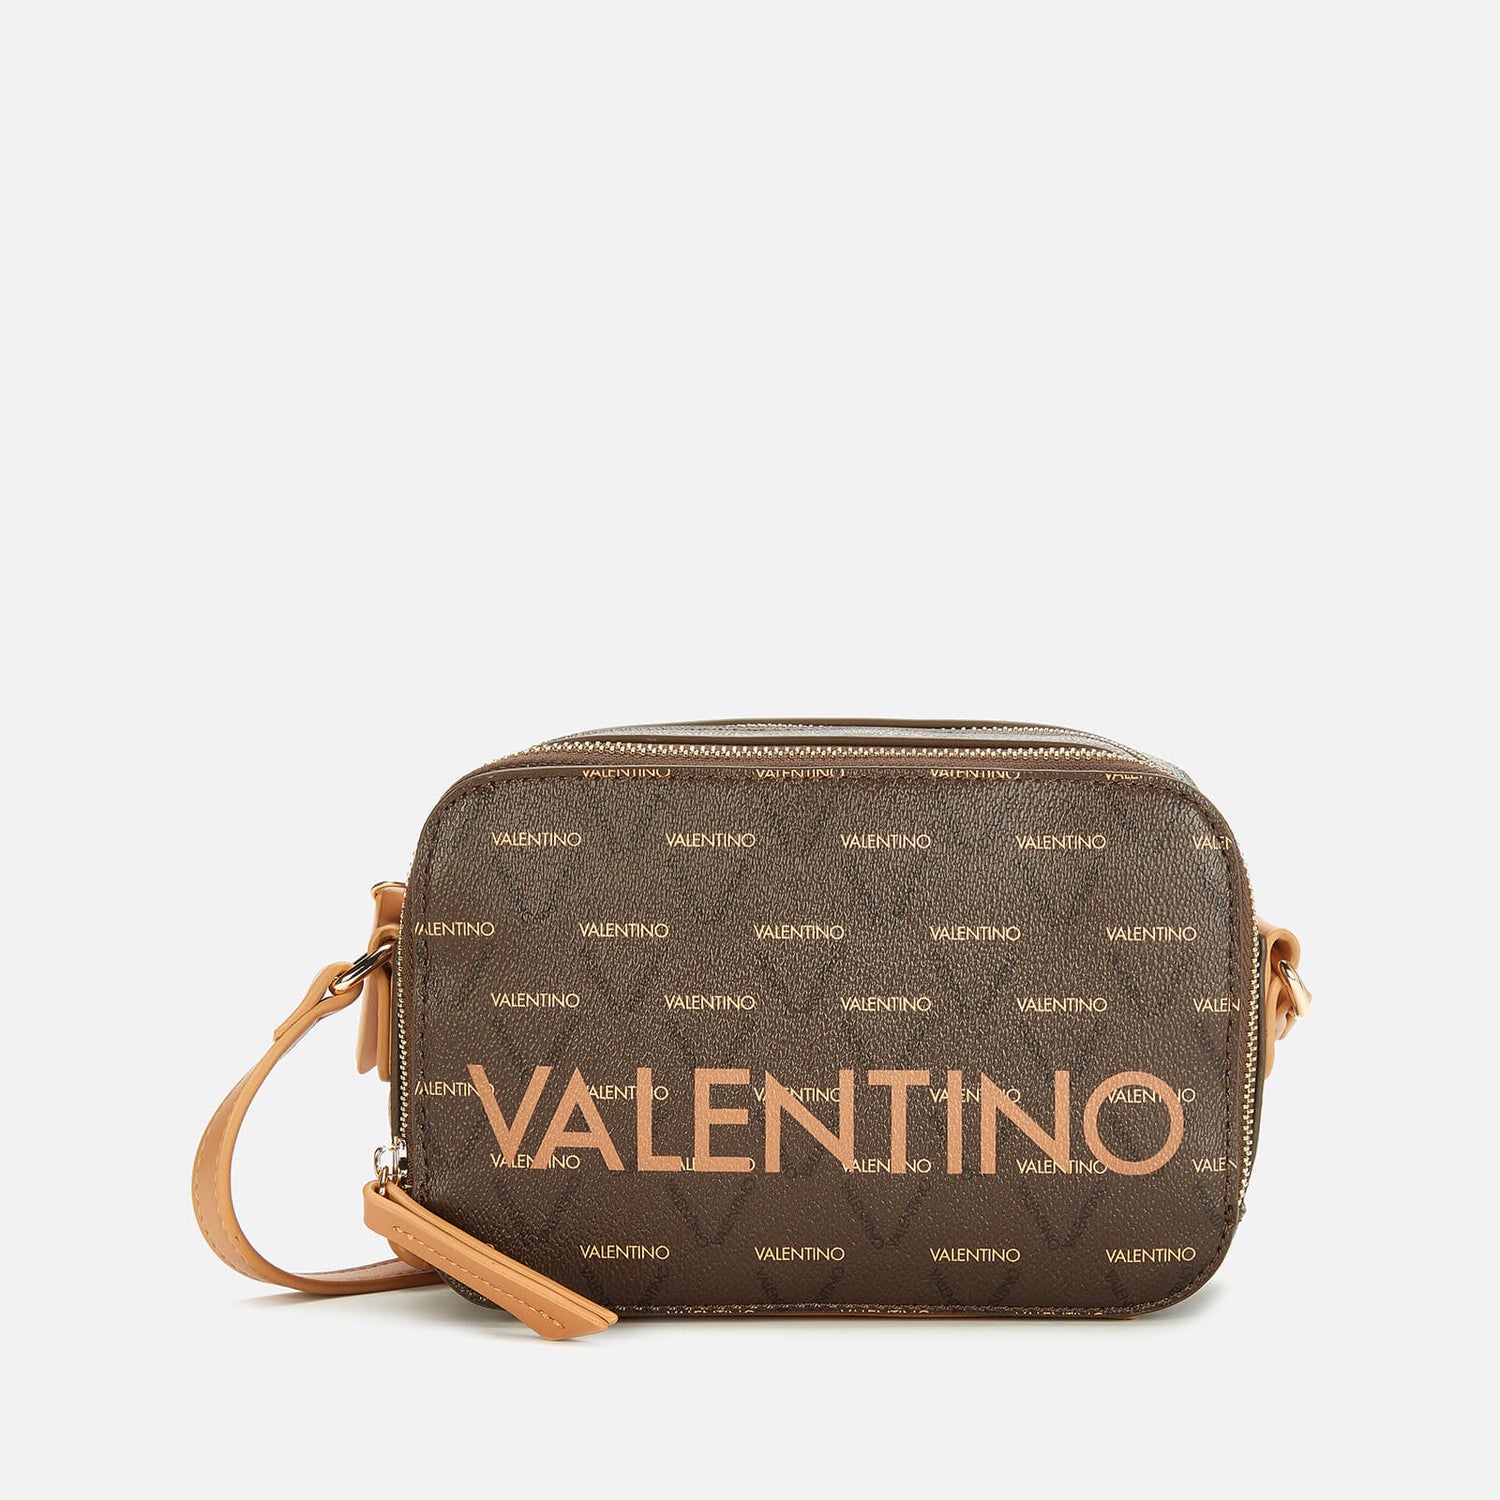 Valentino Bags Women's Liuto Camera Bag - Tan/Multi